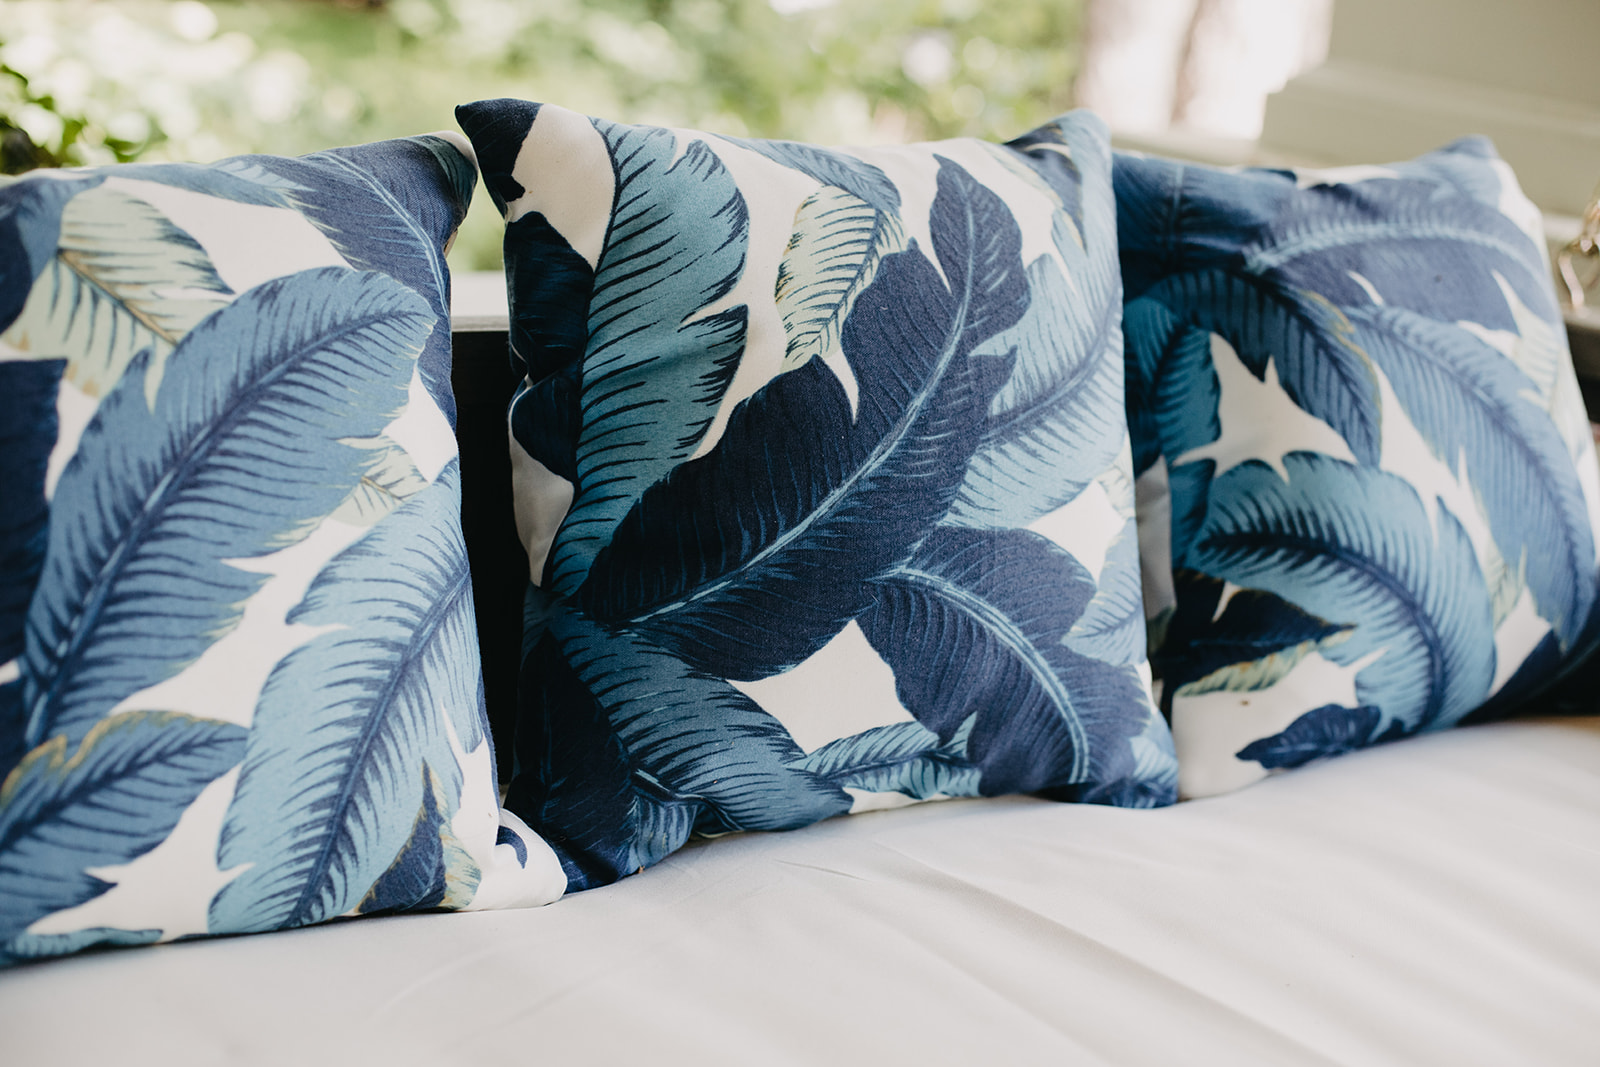 Blue Palm Print Pillows